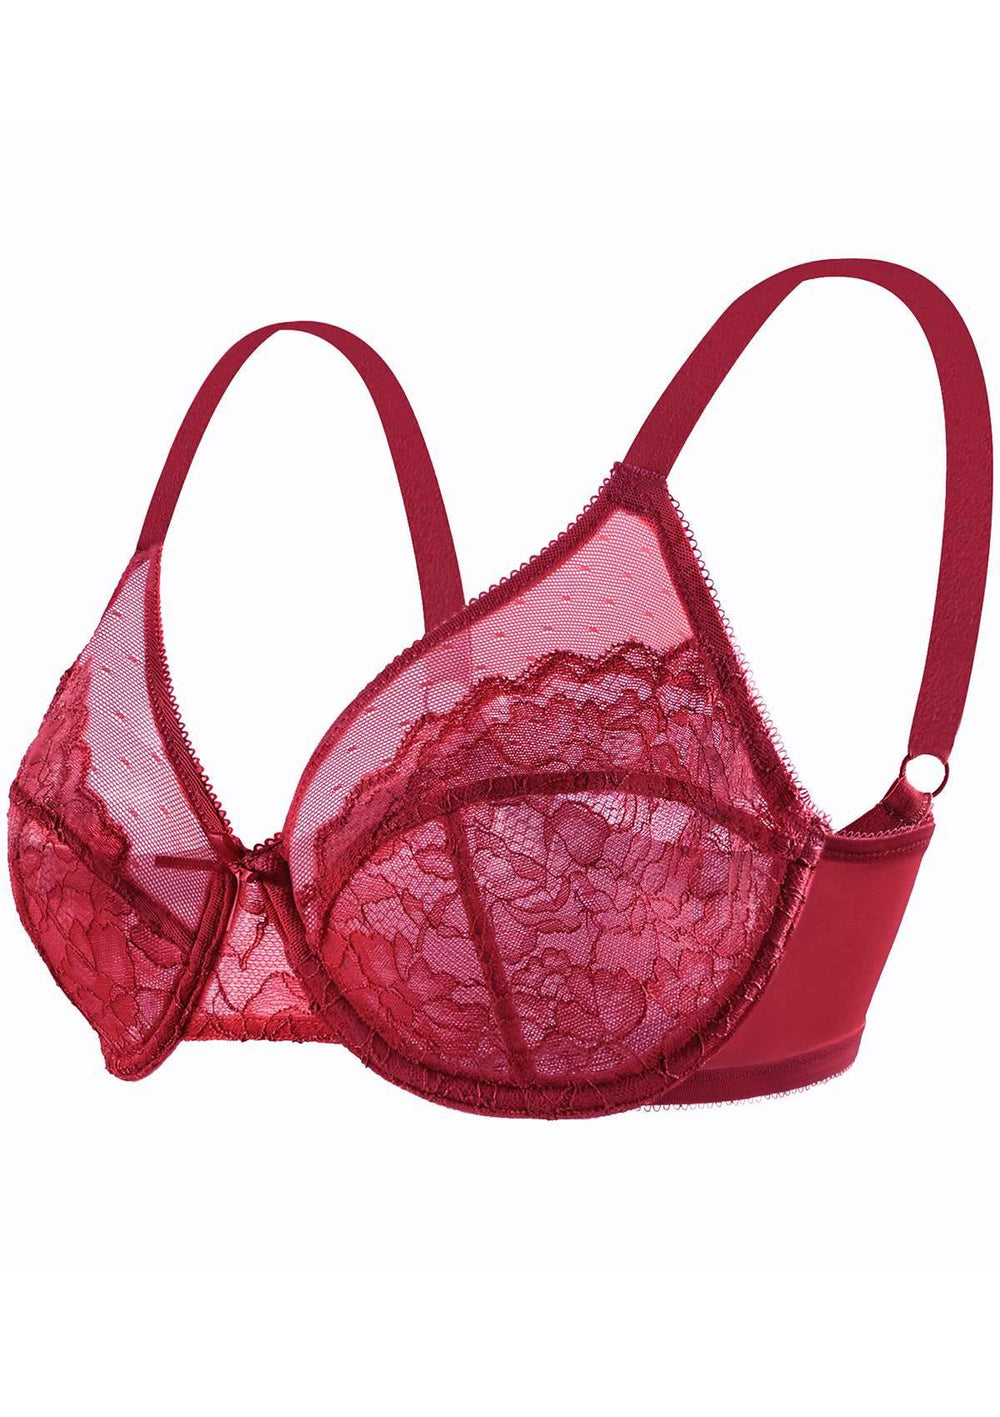 MELENECA Women's Full Coverage No Padding Plus Size Lace Underwire Bra  Cabernet Red 46E 